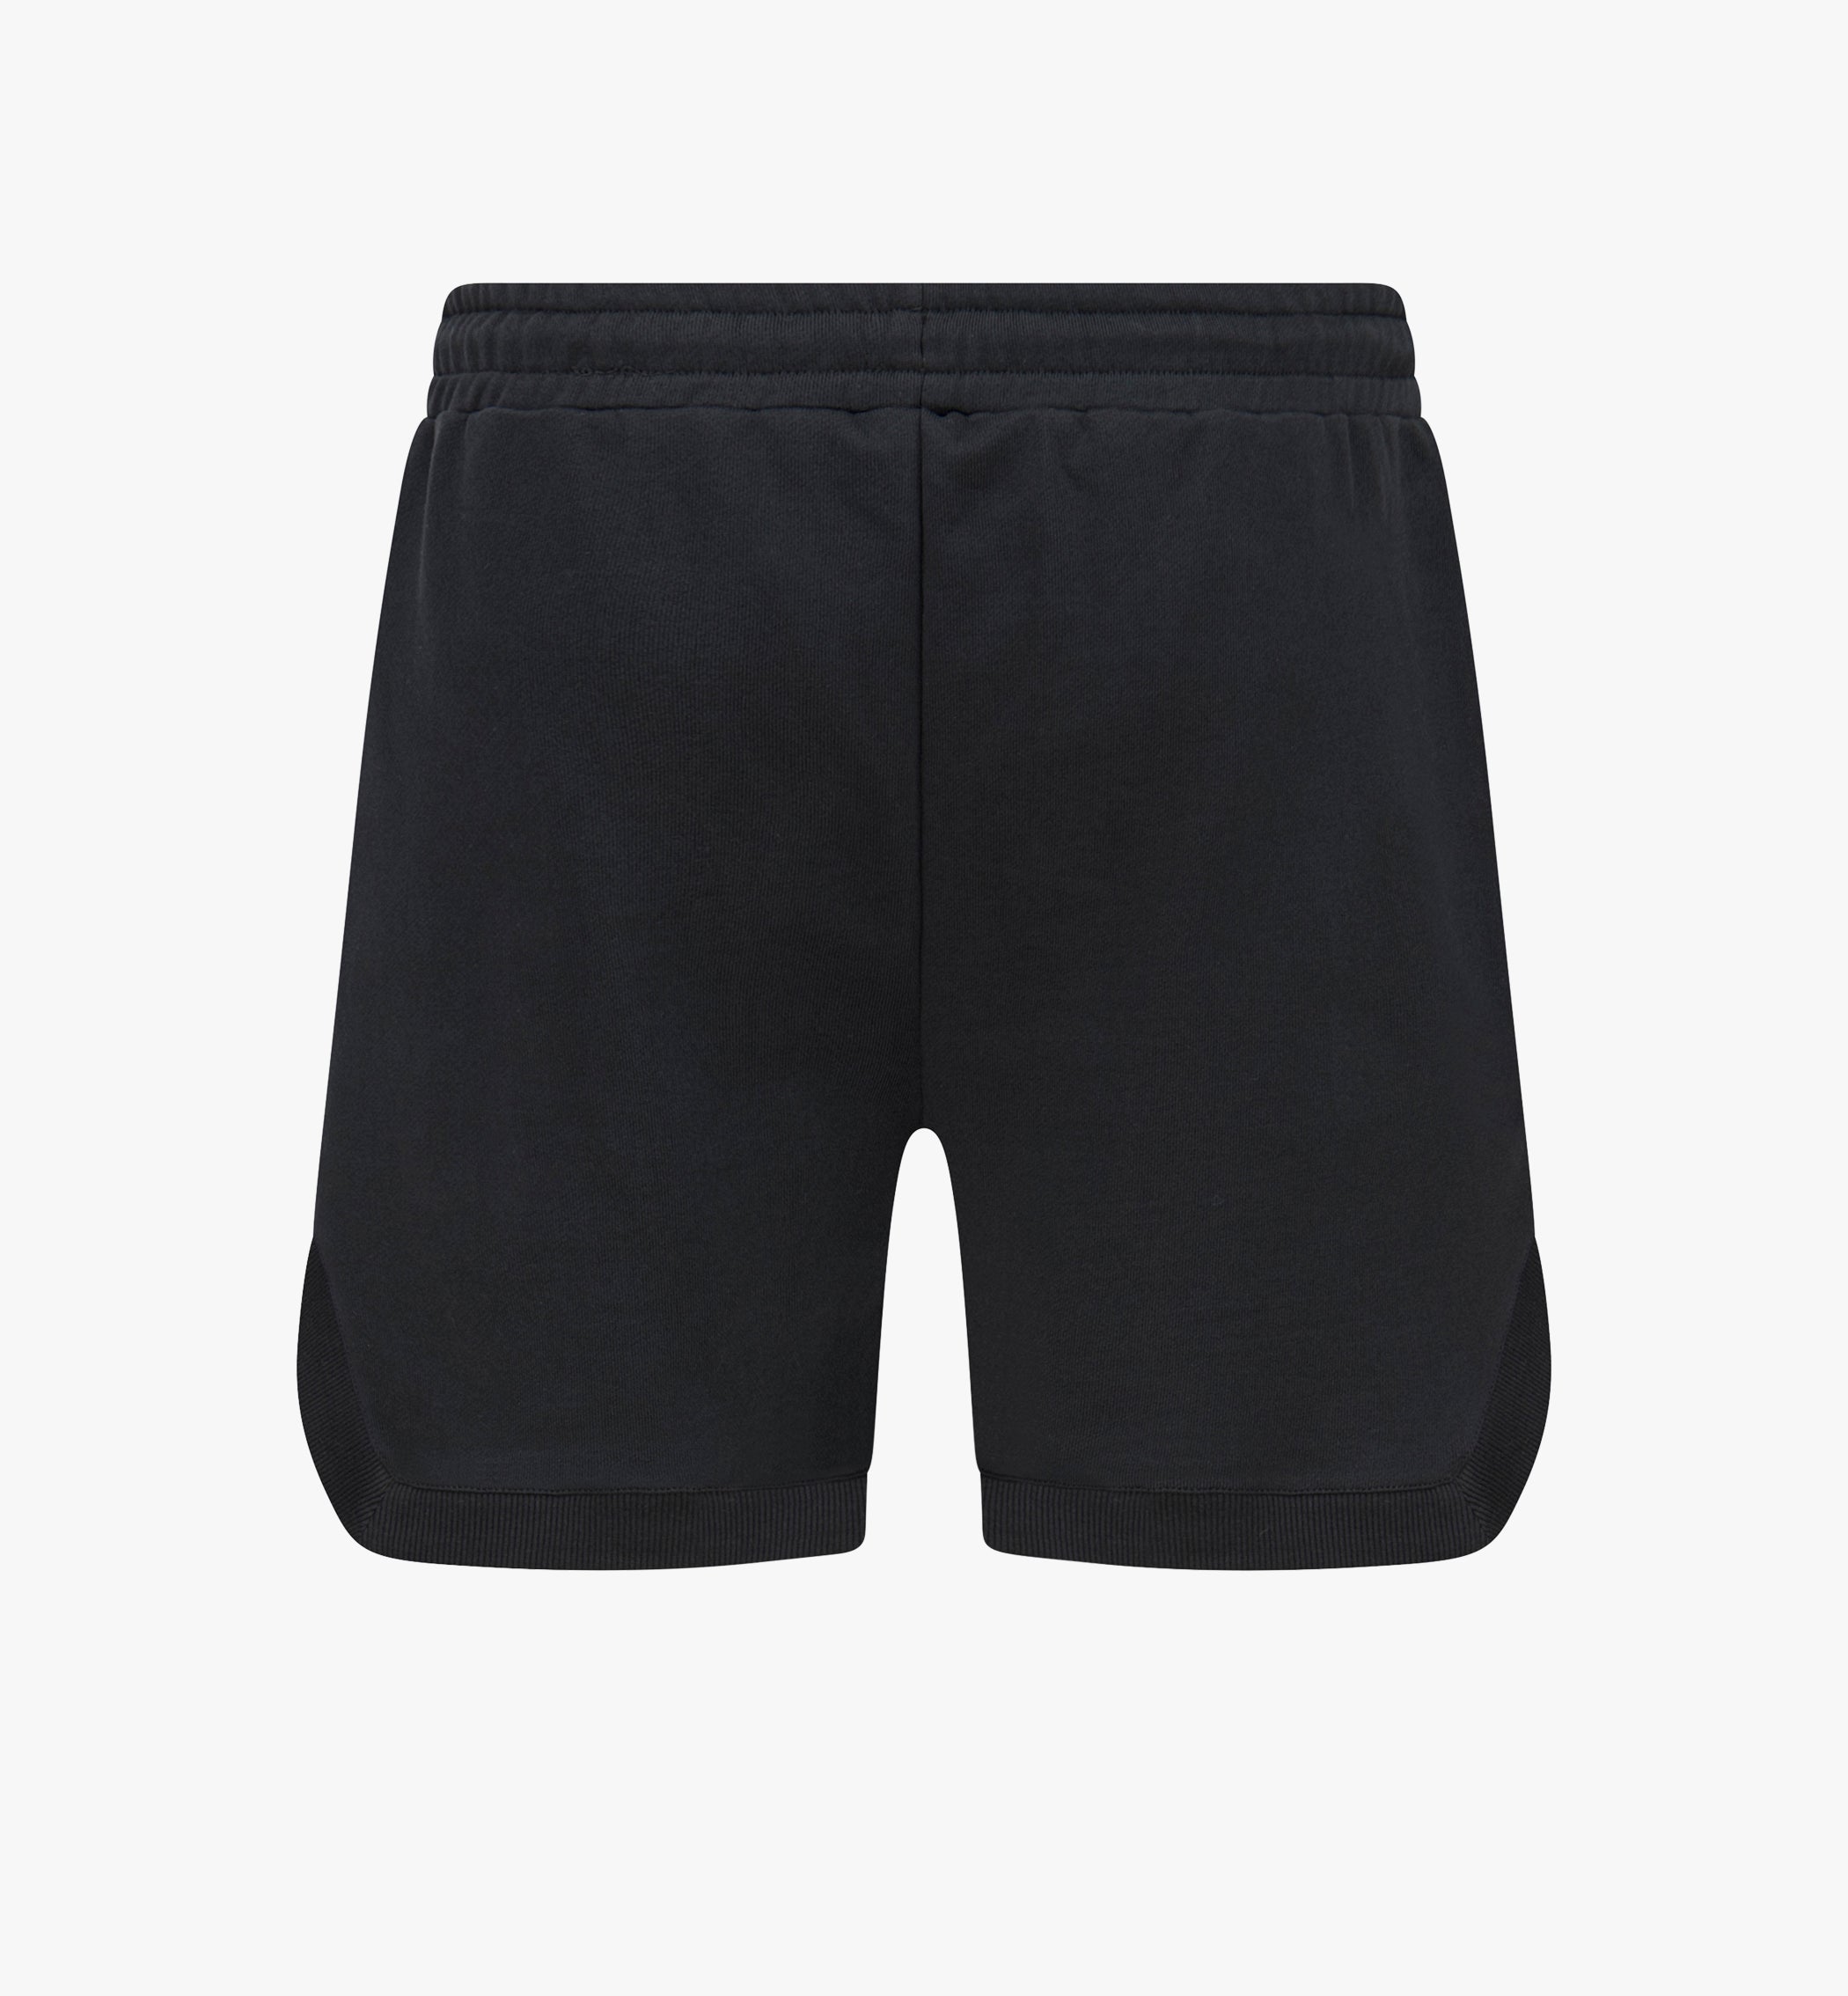 Shorts 1.0